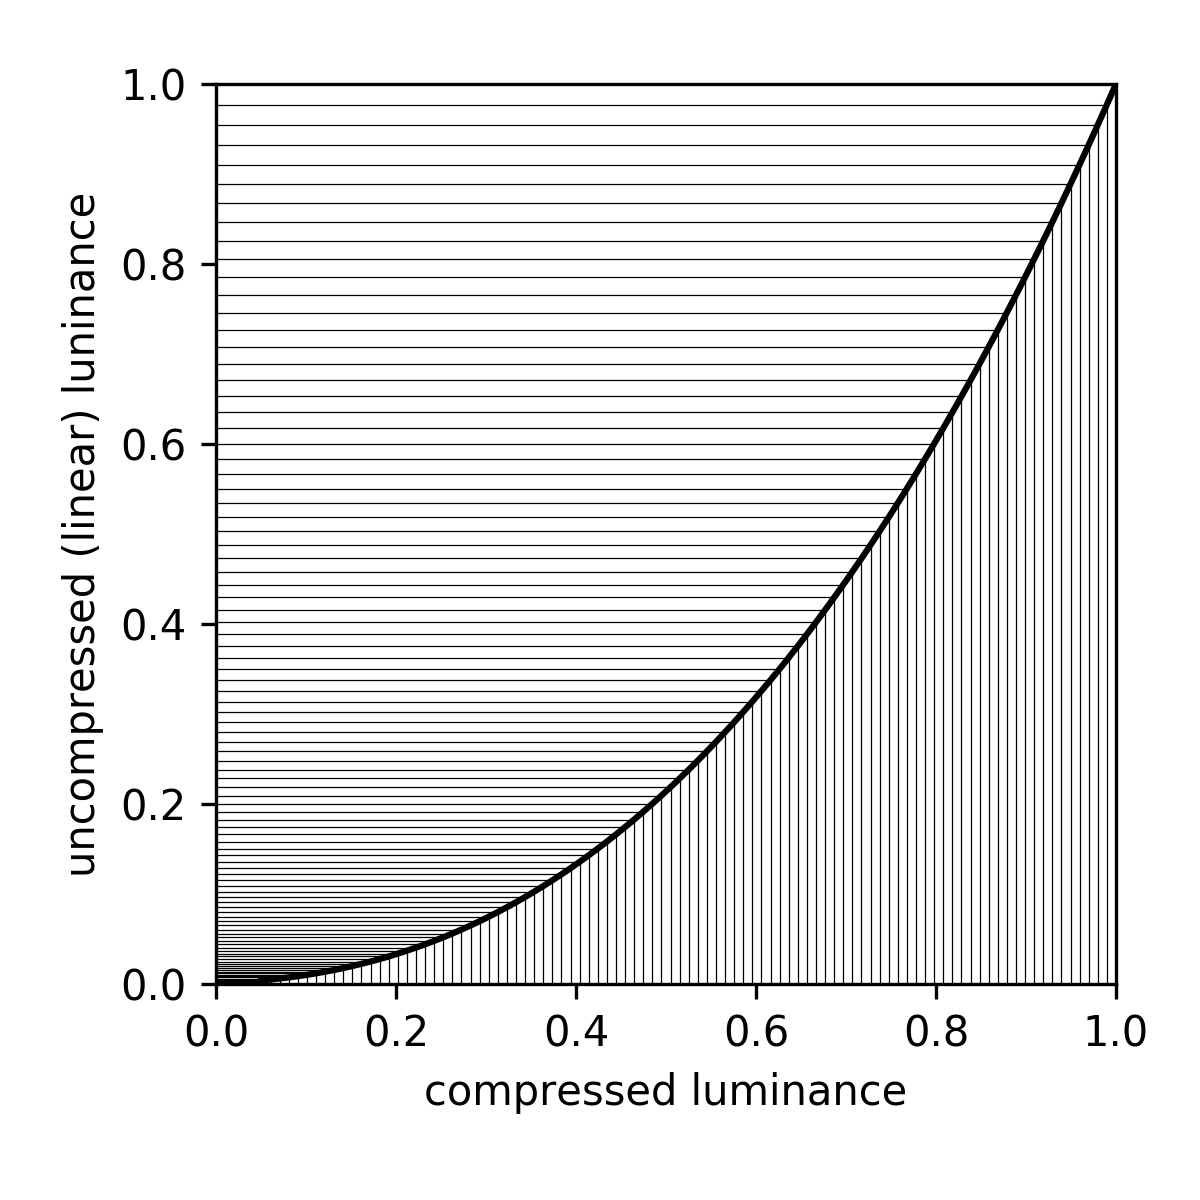 Gamma compression function